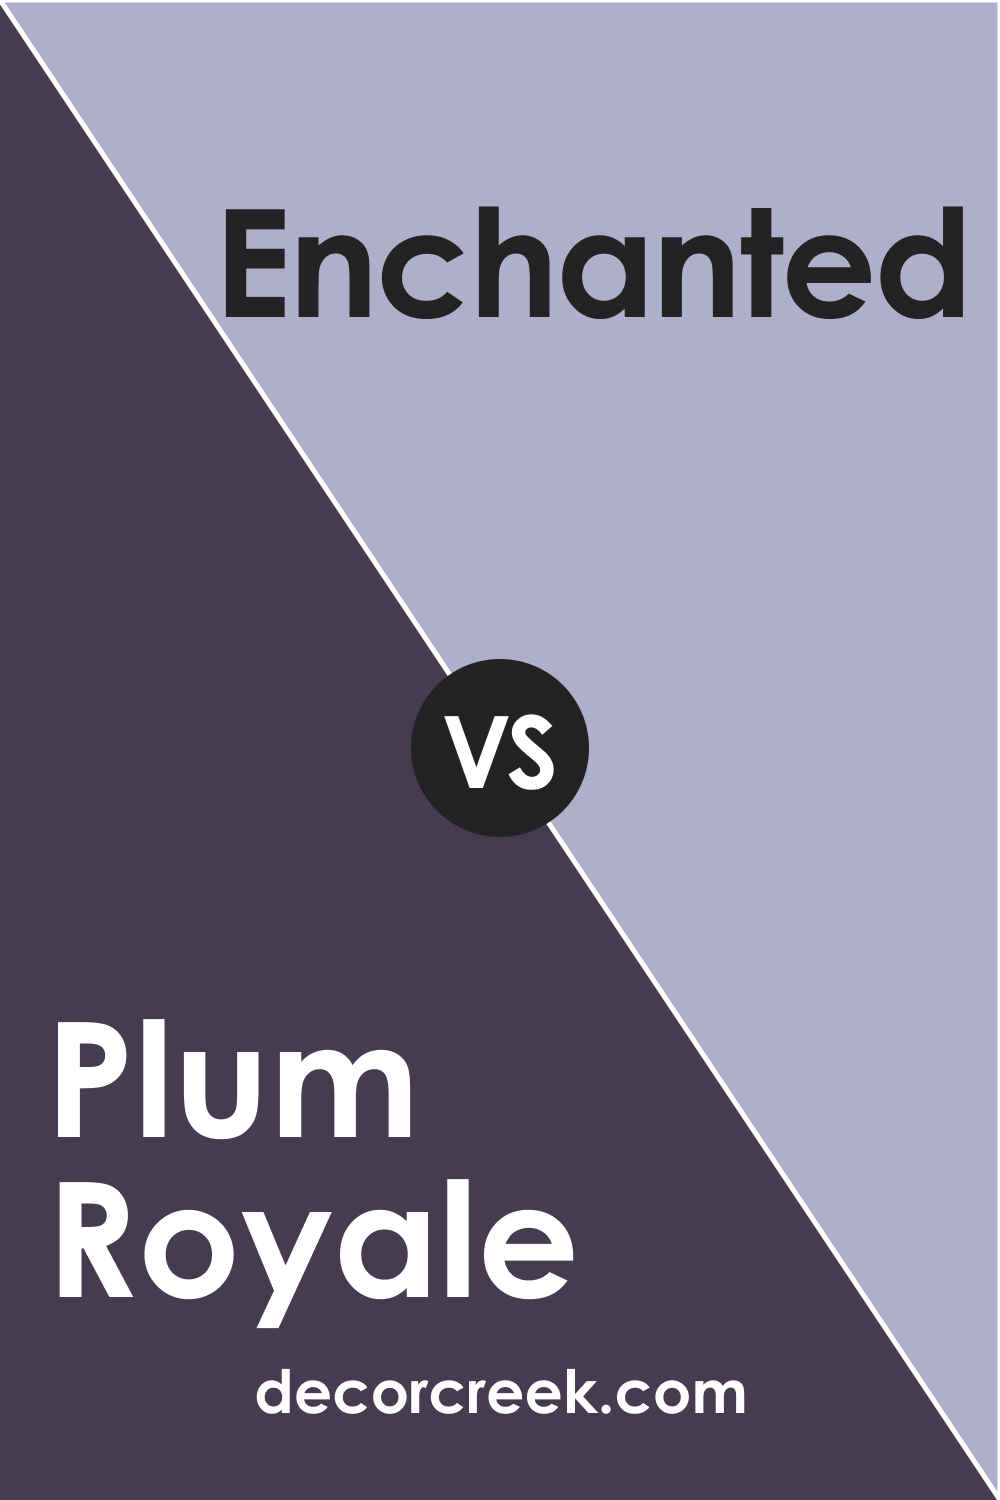 Plum Royale 2070-20 vs. BM 2070-50 Enchanted